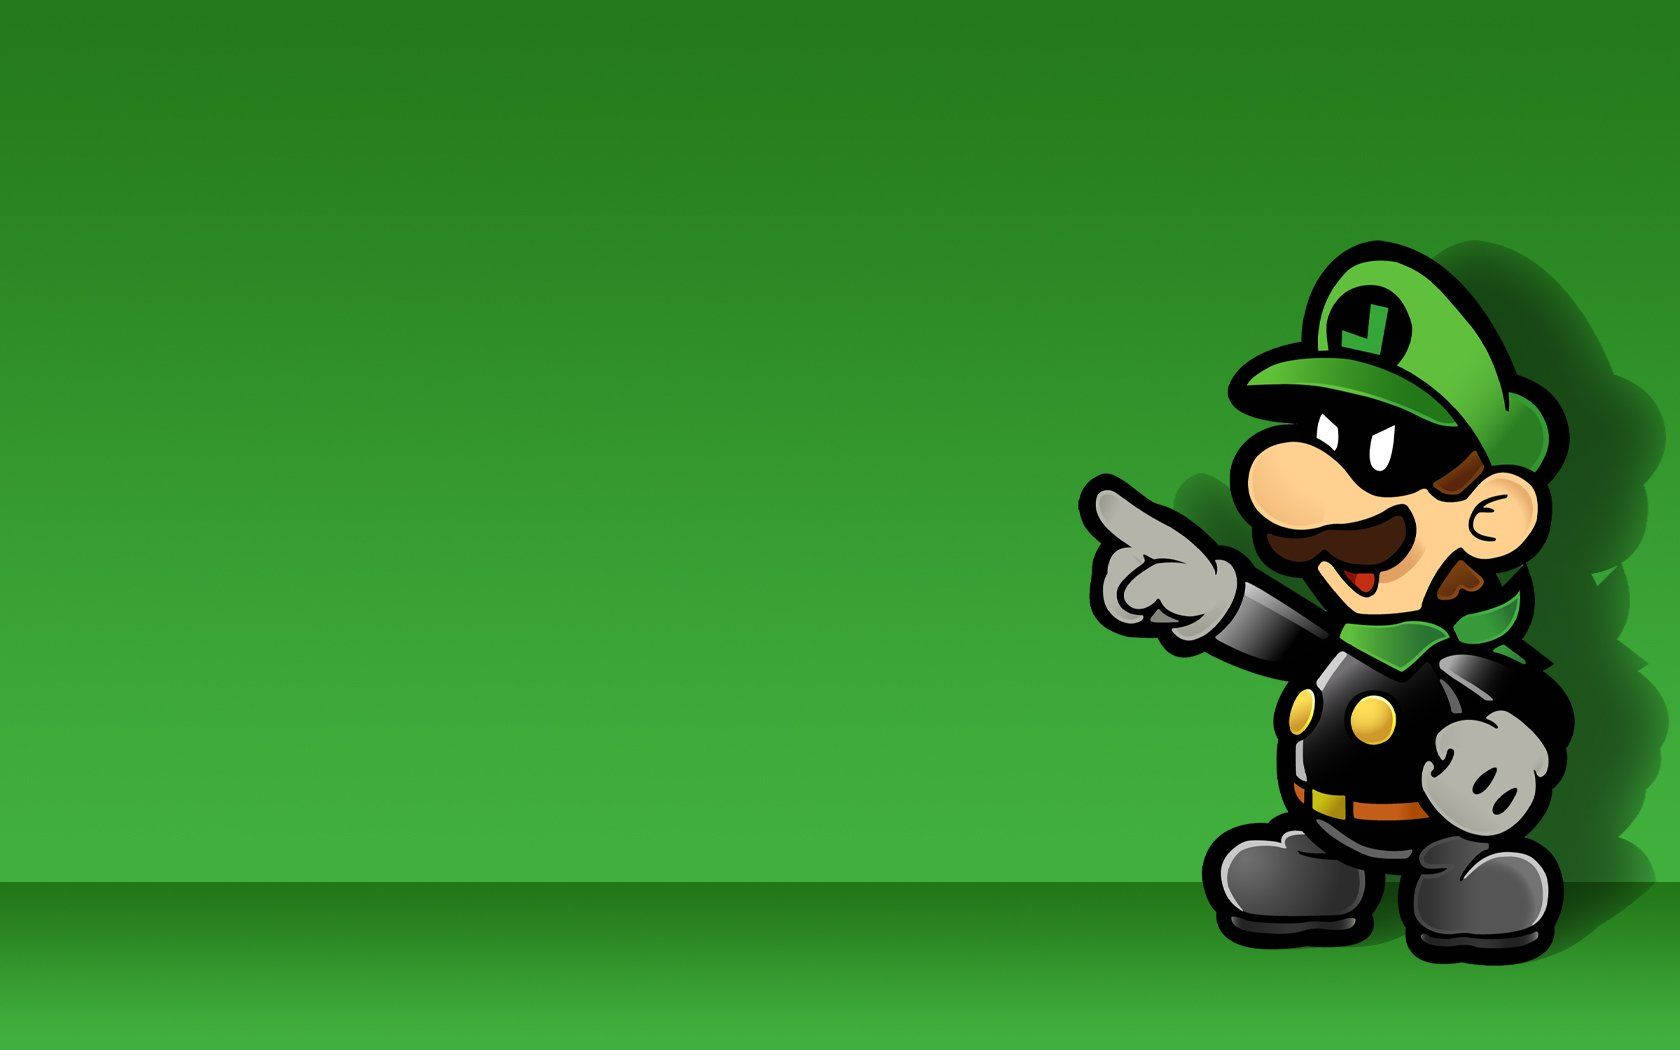 Top 999+ Luigi Wallpaper Full HD, 4K✅Free to Use